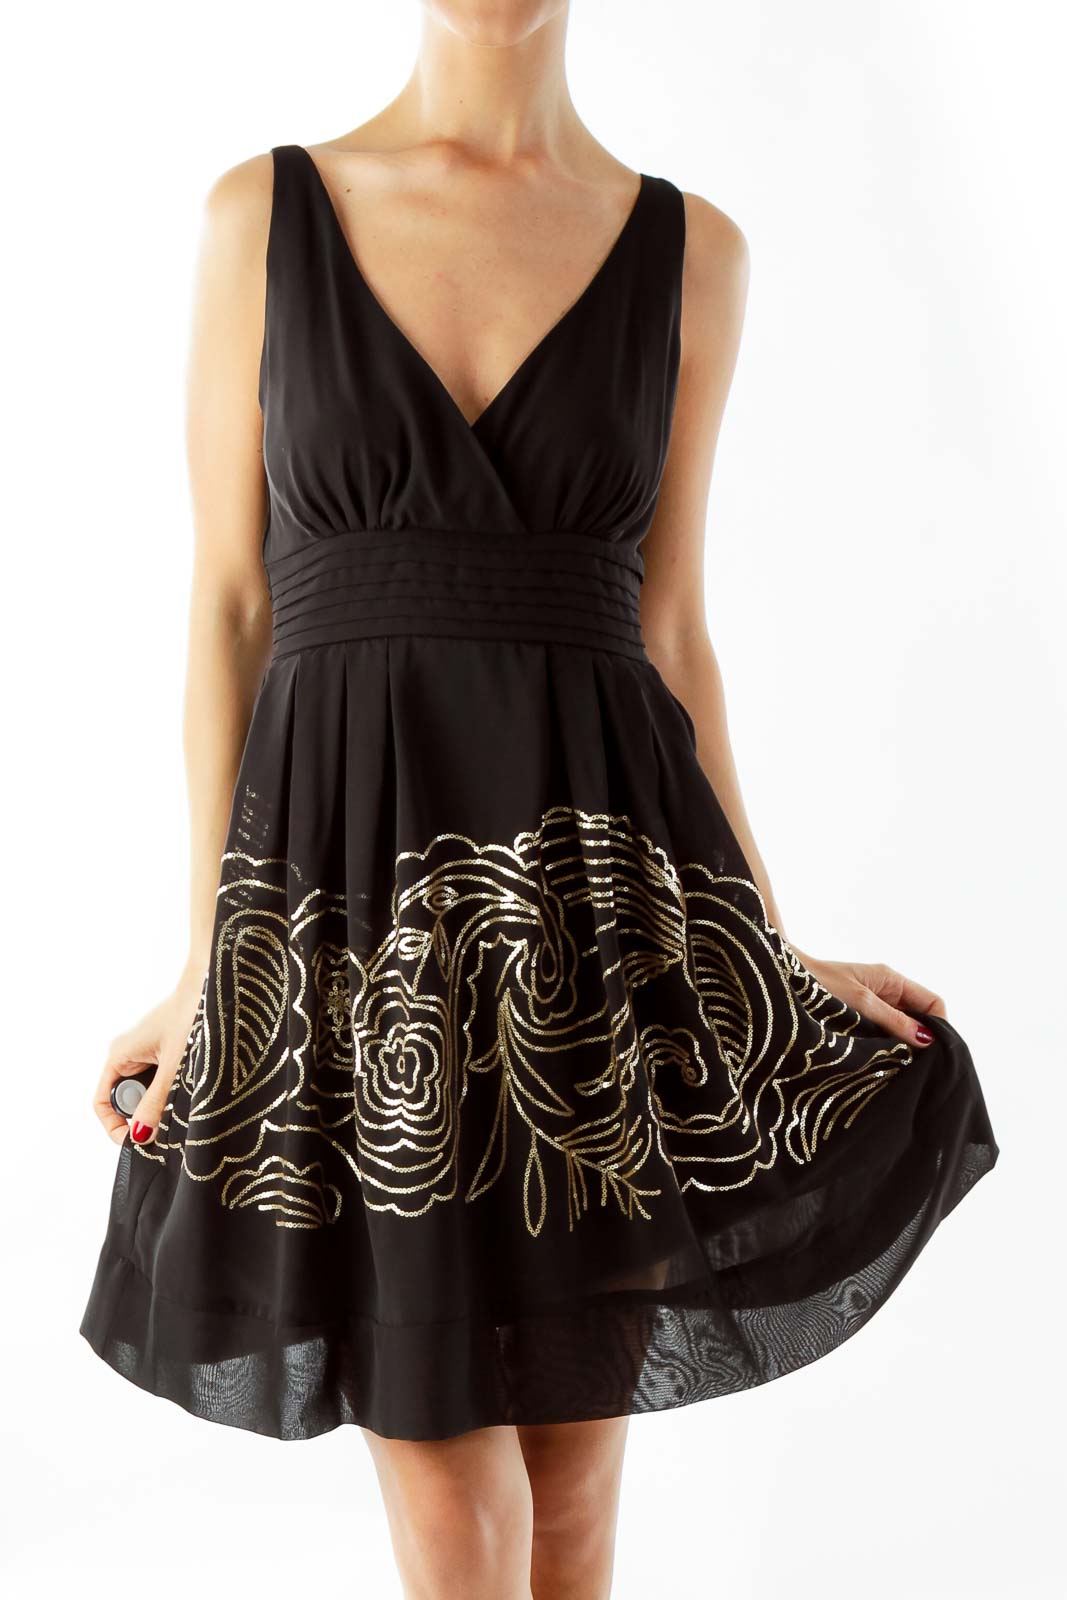 Black & Gold Sequined Dress Front